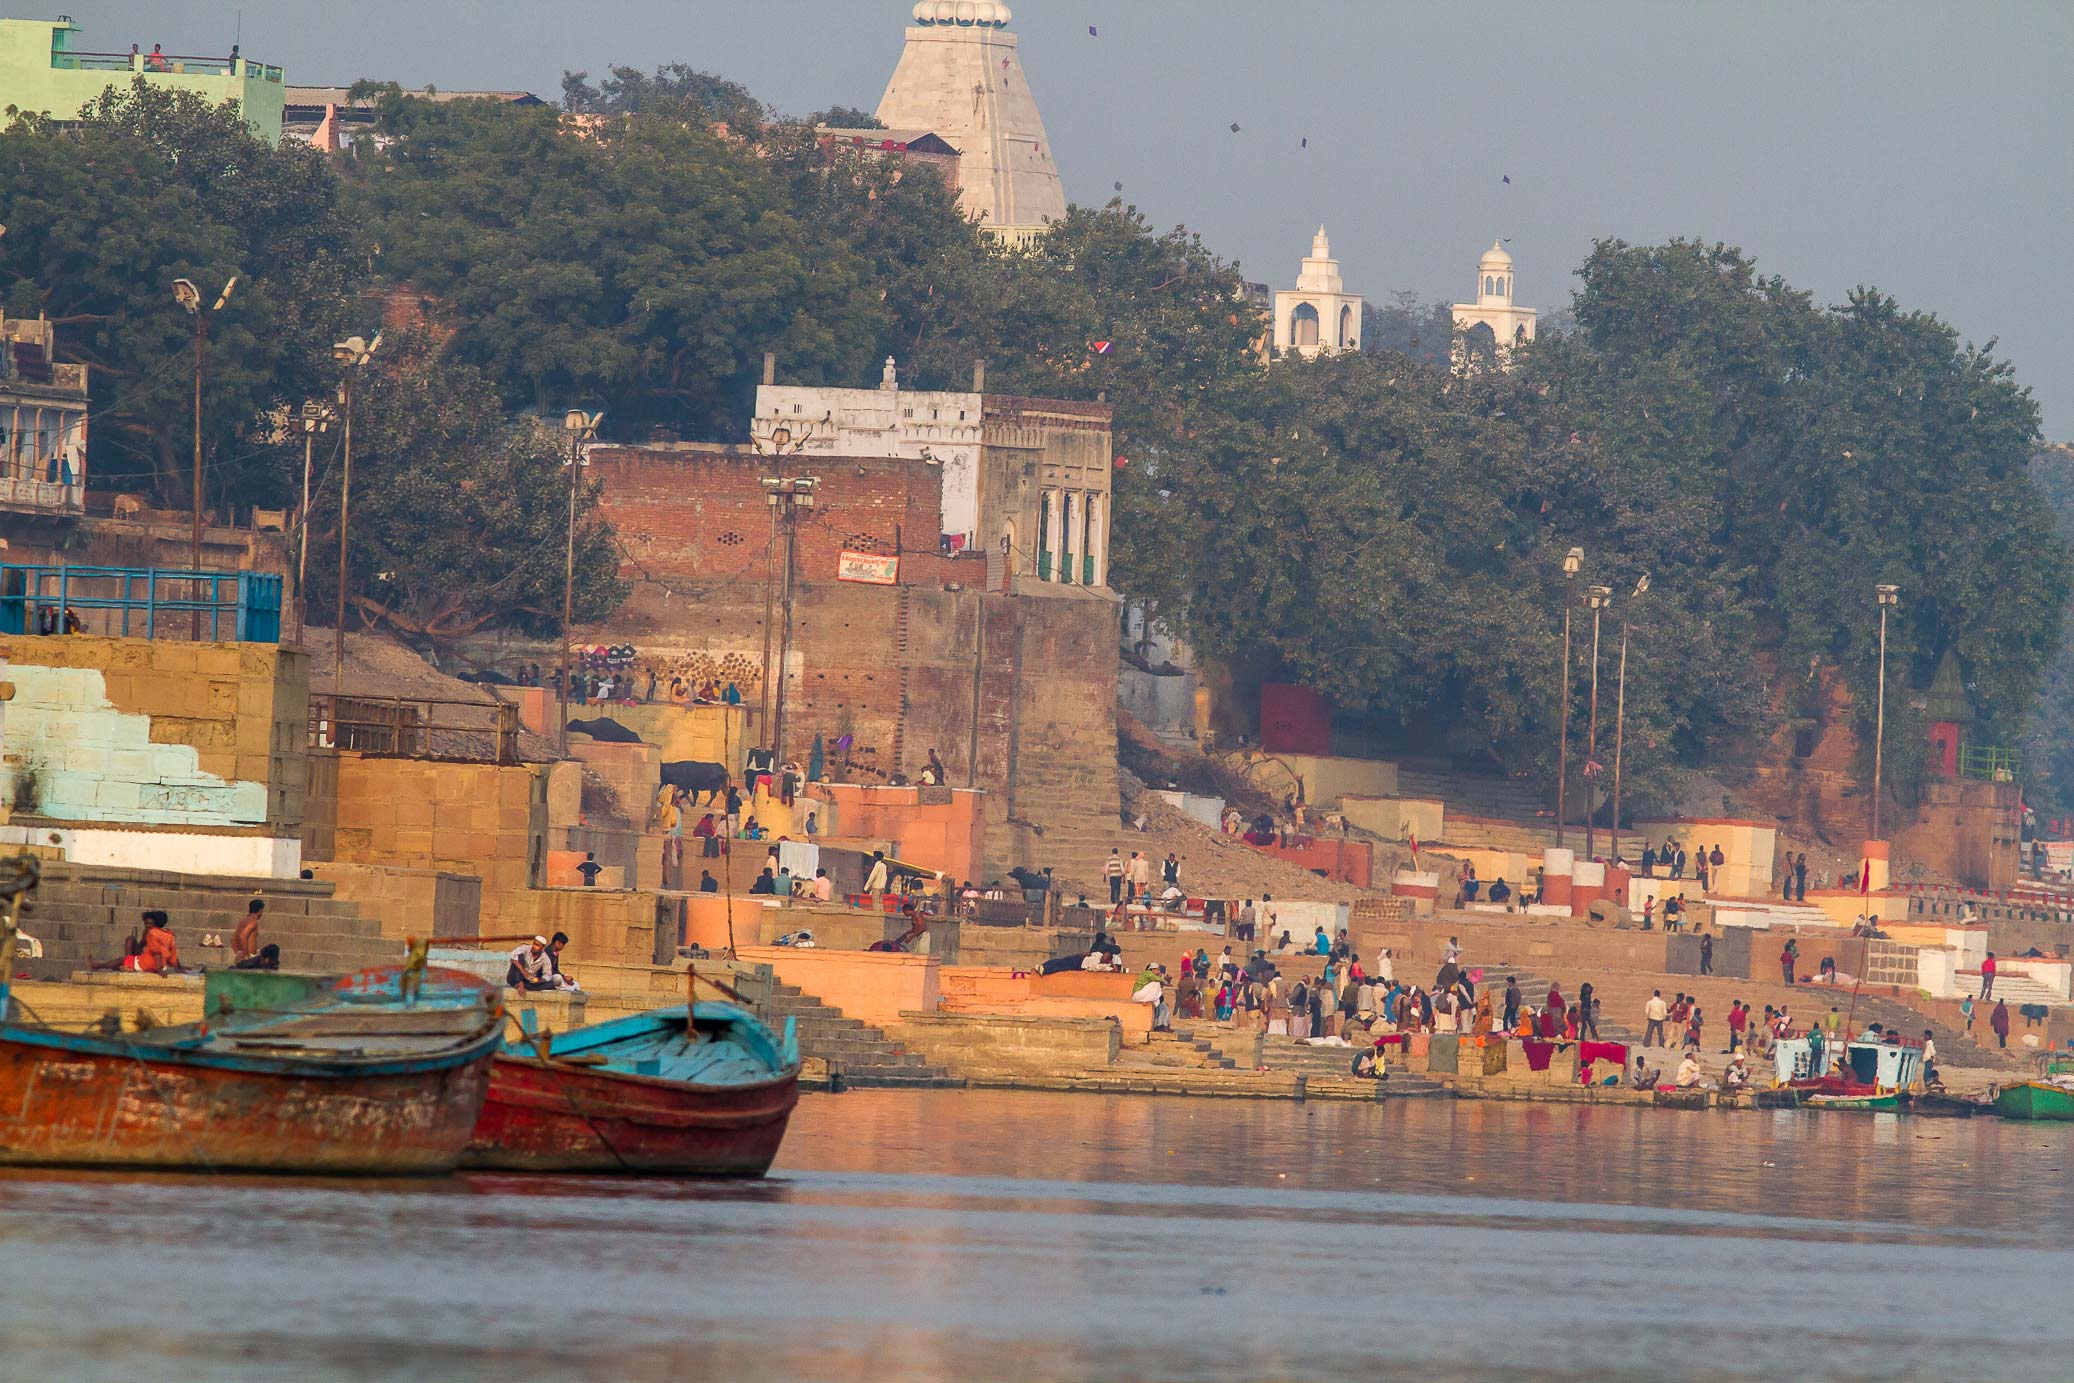 /Guewen/galeries/public/Voyages/Inde/varanasi/gath/gath-4/Varanasi-gath_272.jpg